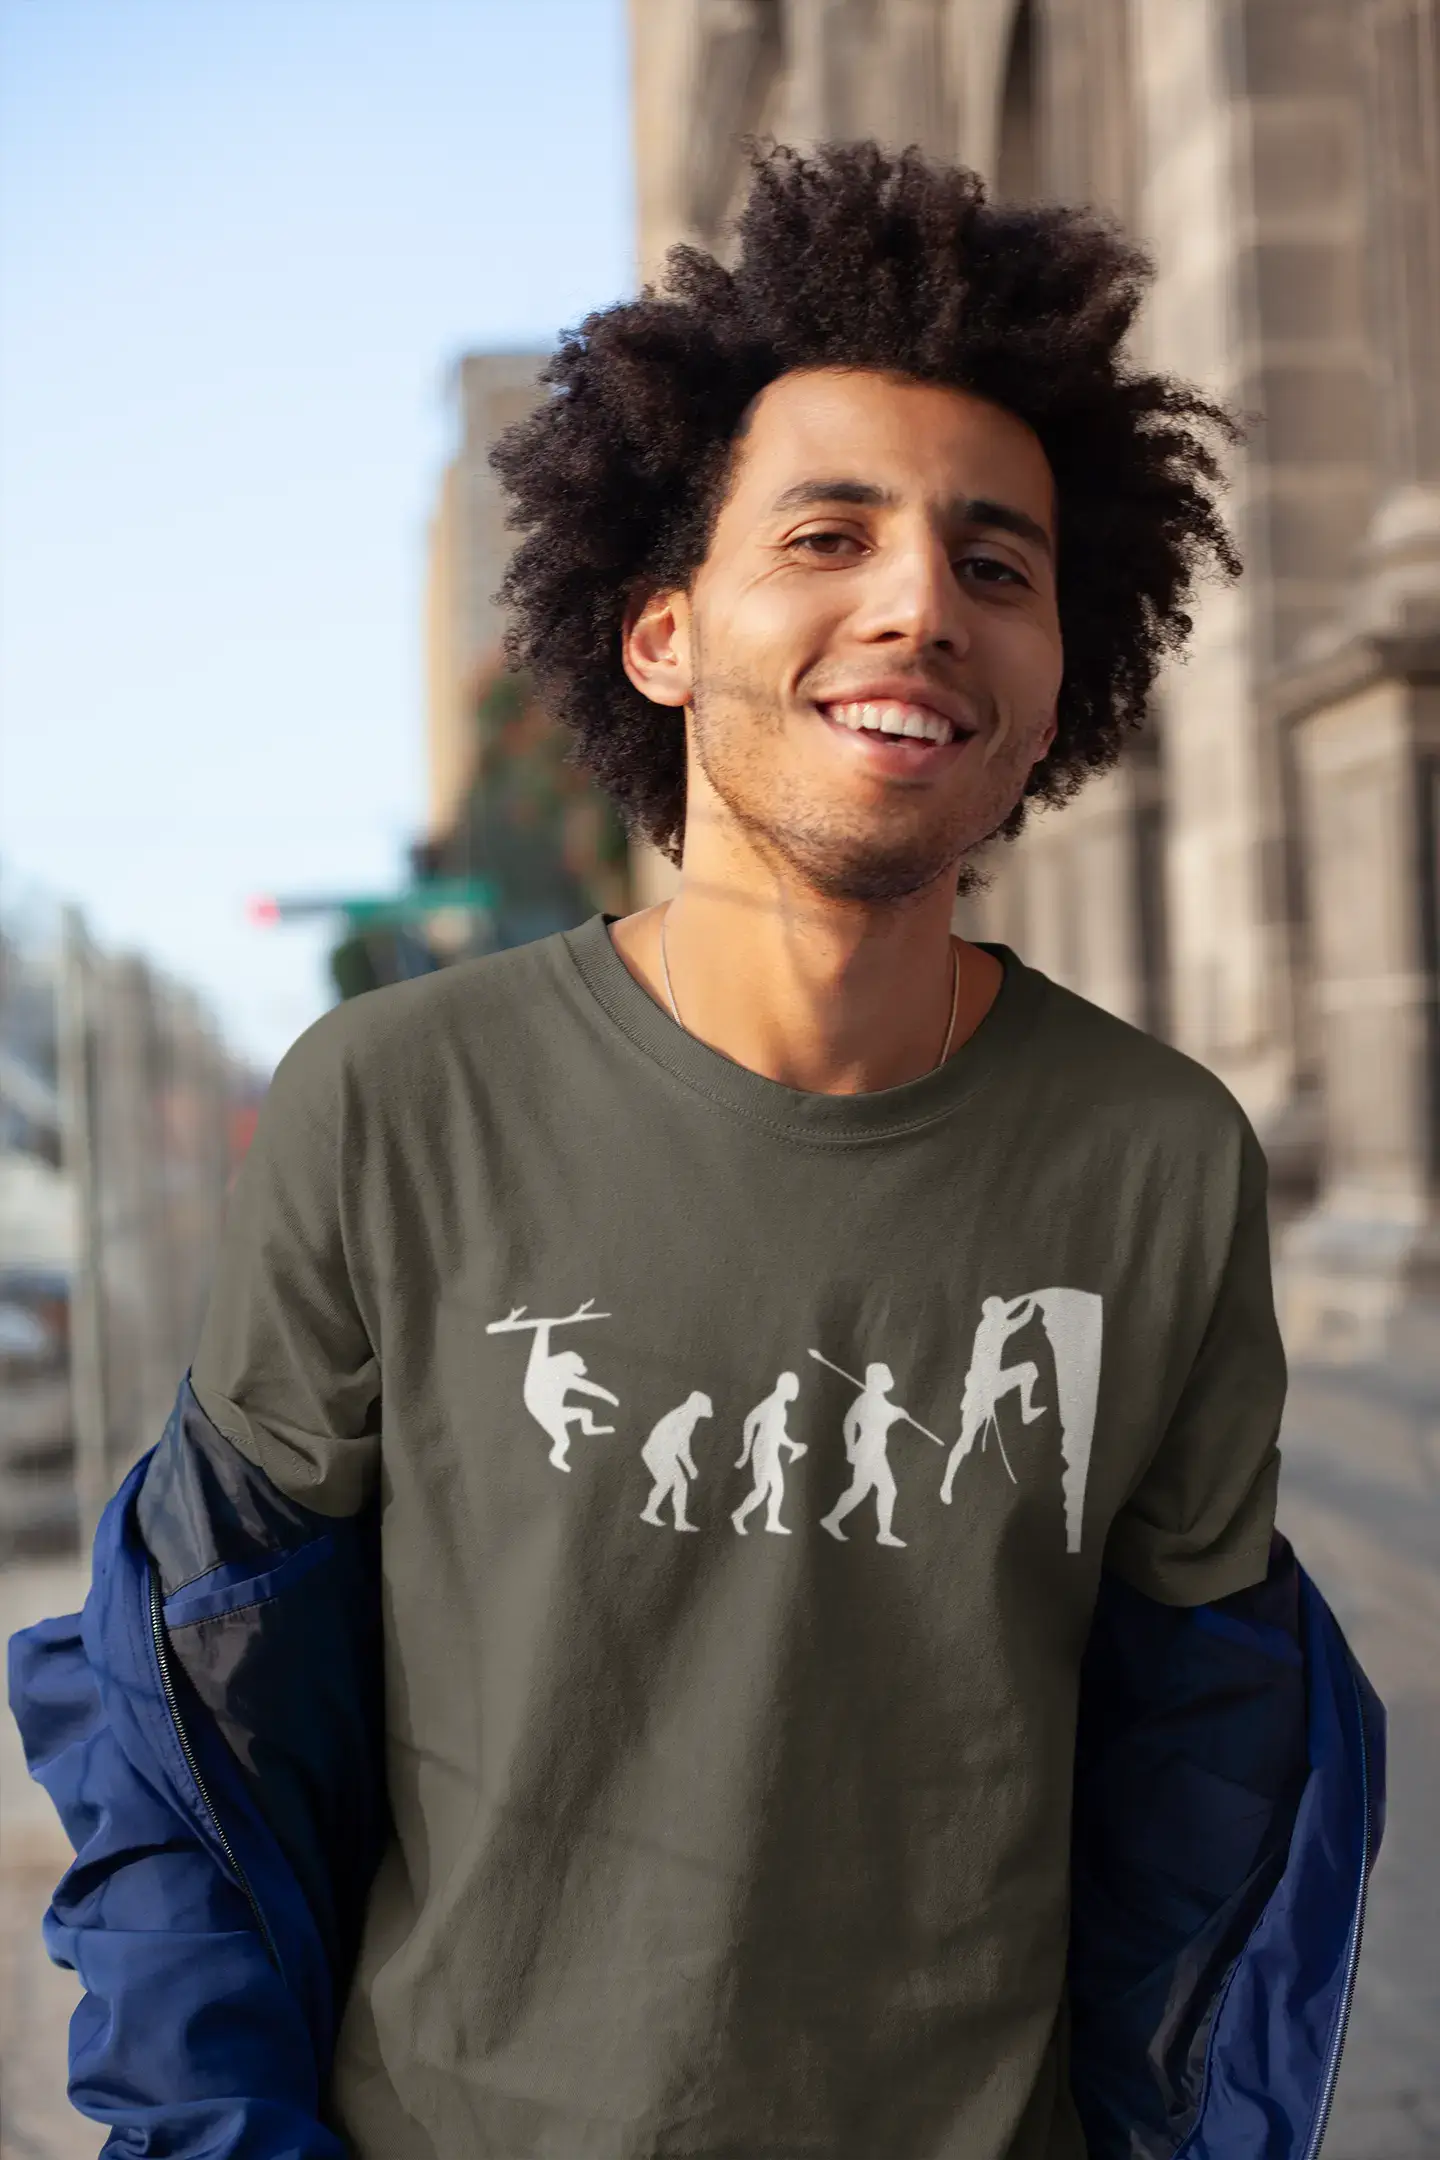 ULTRABASIC - Graphic Printed Men's Climbing Evolution T-Shirt Burgundy